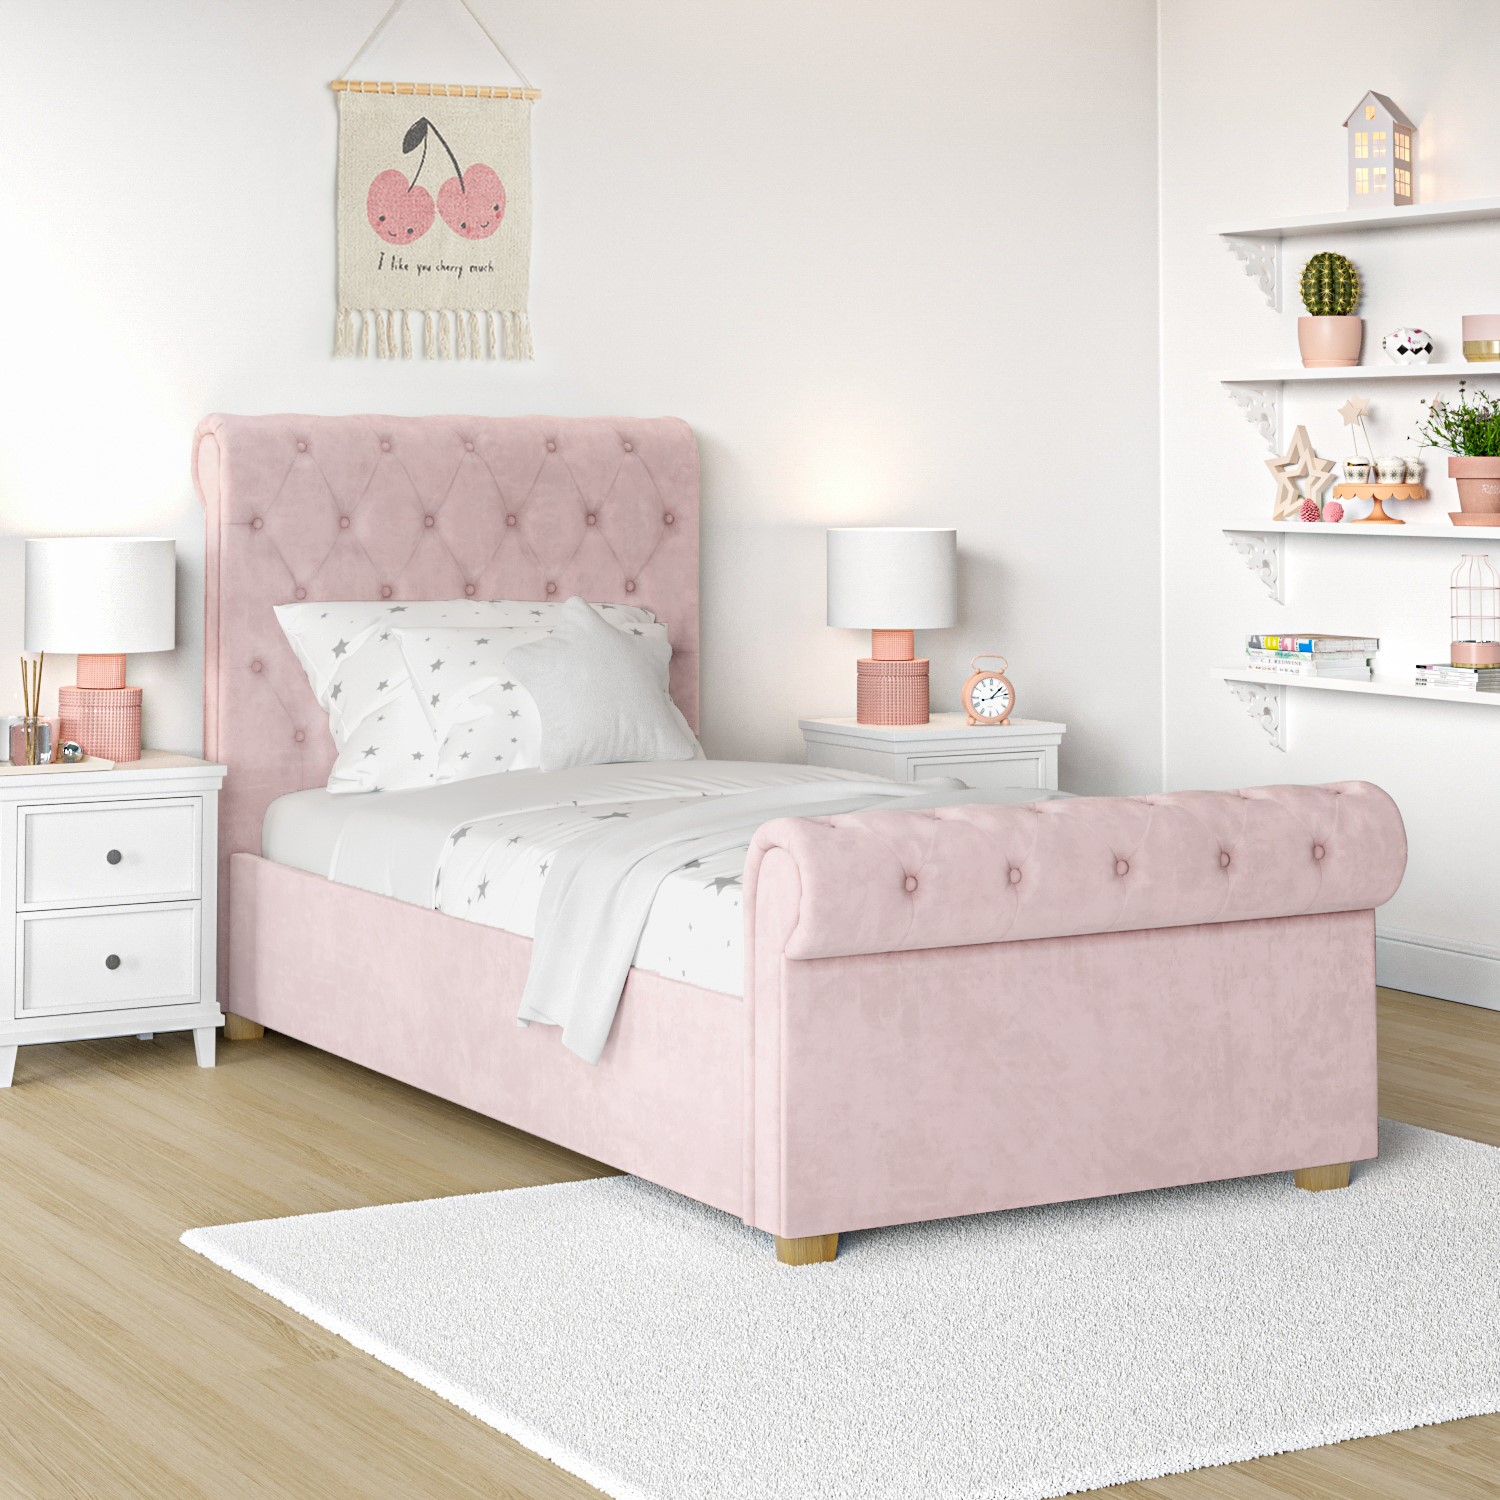 Safina Roll Top Single Sleigh Bed in Baby Pink Velvet